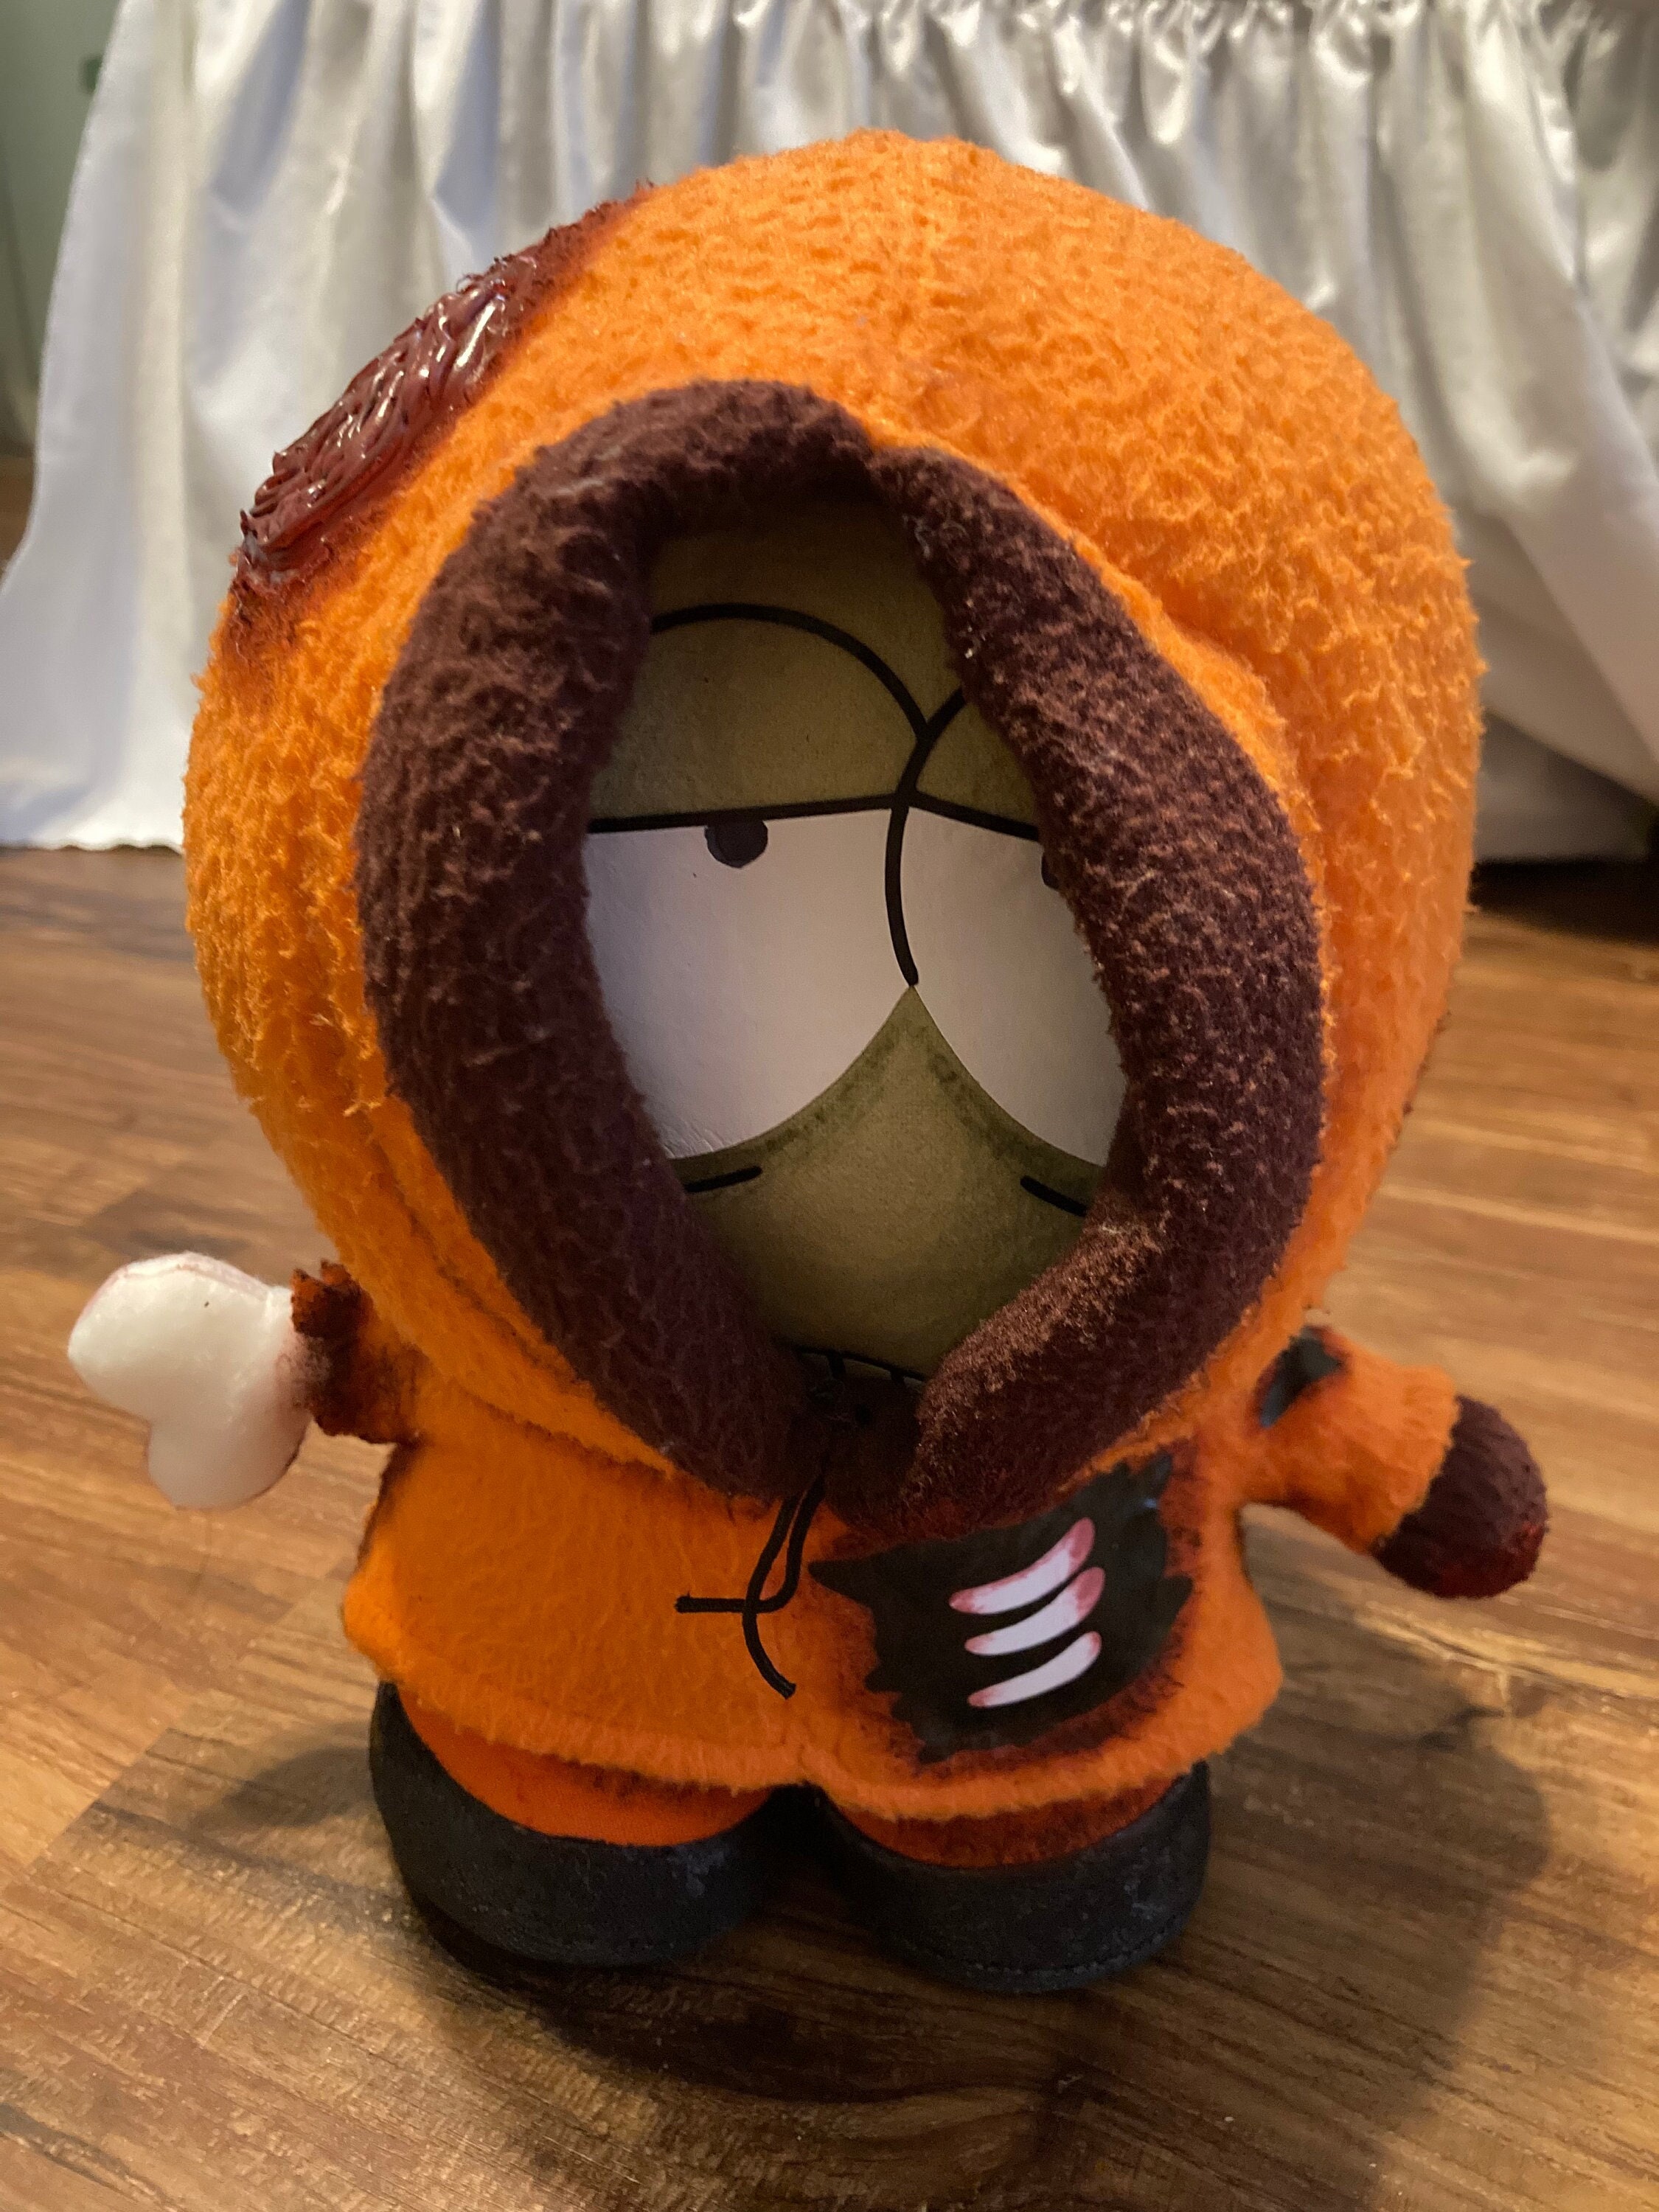 South Park custom zombie kenny plush - Etsy 日本